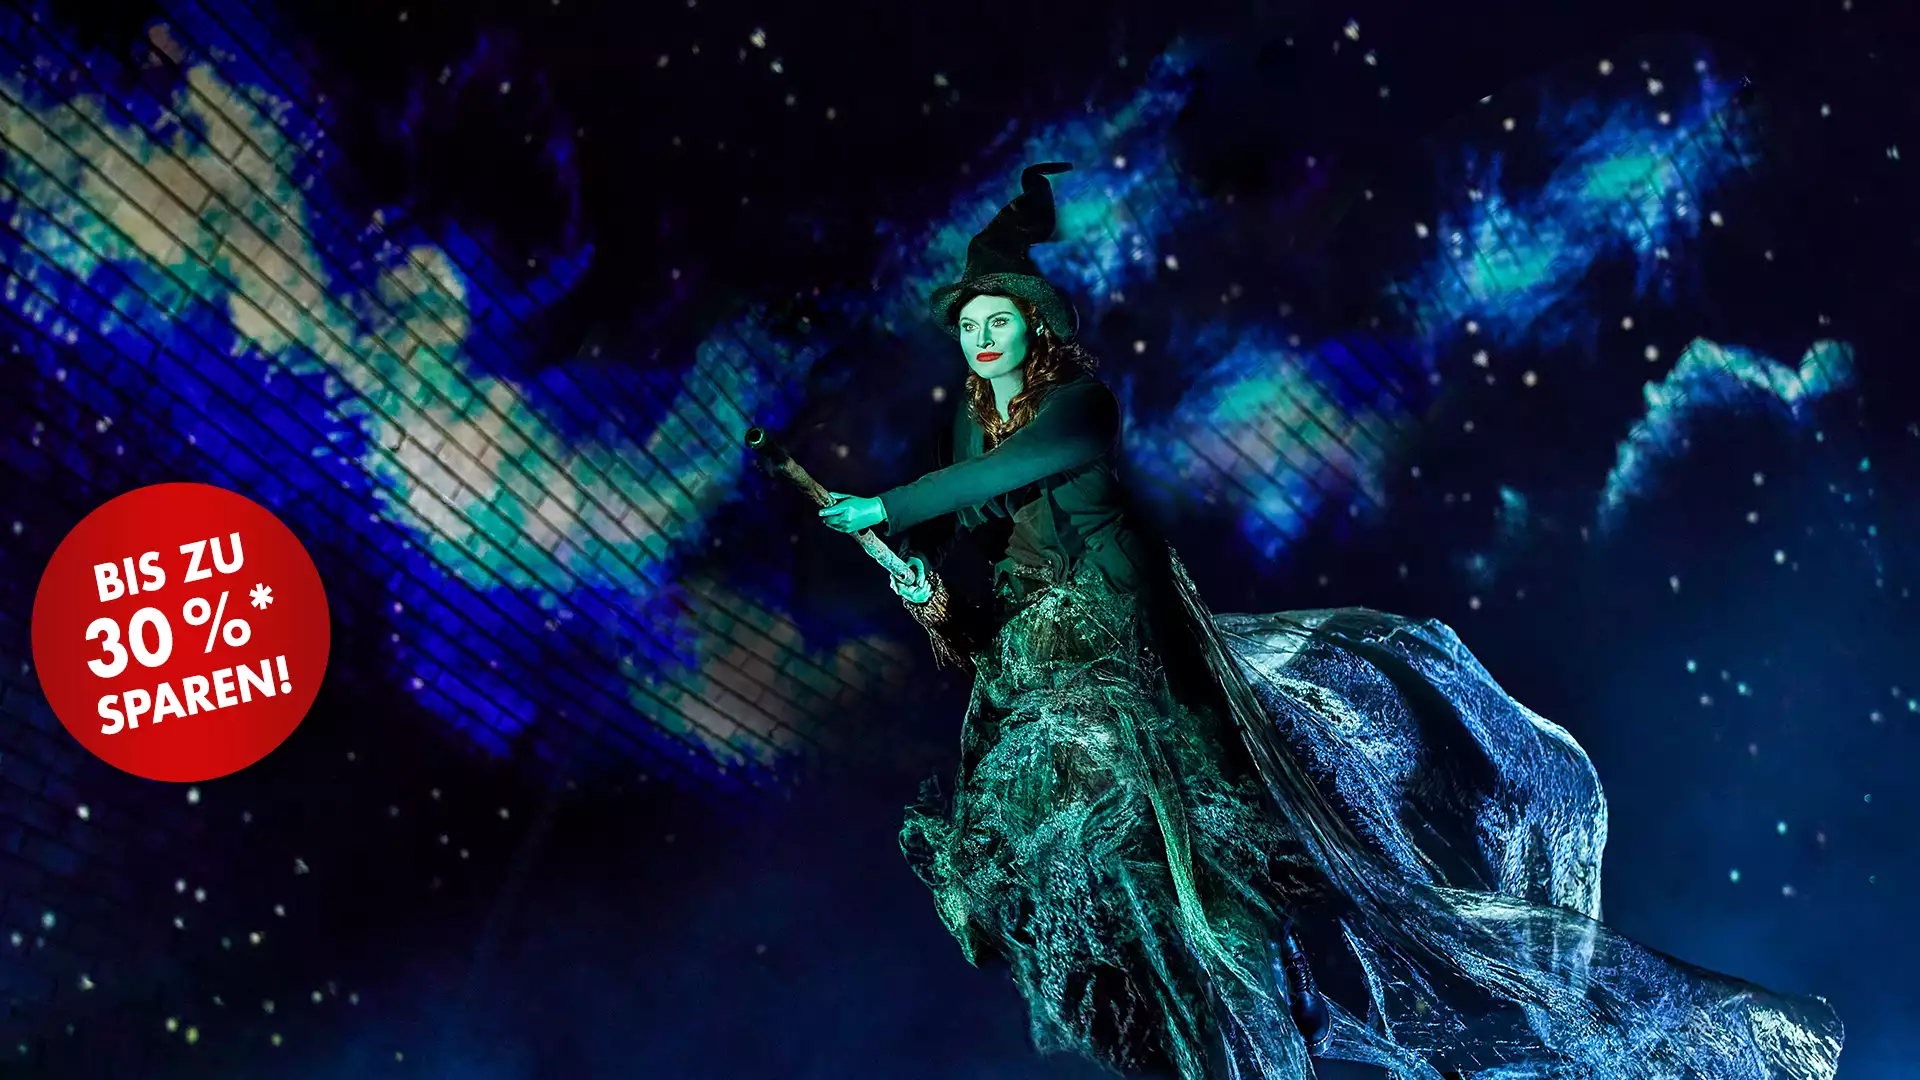 Hexe Elphaba beim Flug auf ihrem Besen vor Sternenhimmel – Szenenmotiv